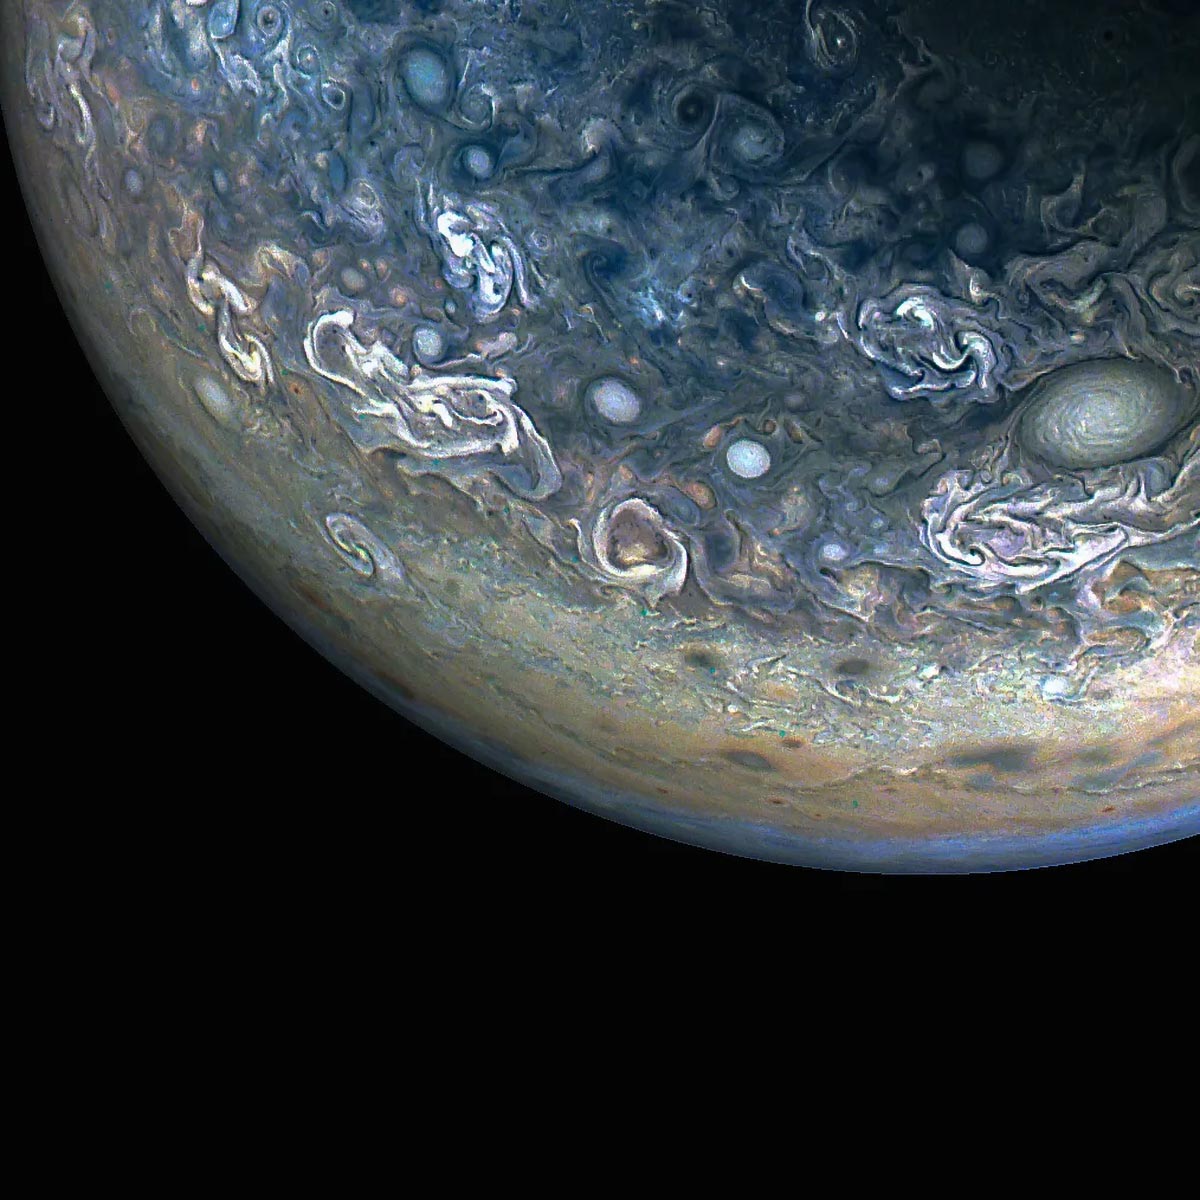 Pesawat ruang angkasa Juno milik NASA menangkap gambar menakjubkan dari kekacauan warna-warni Jupiter